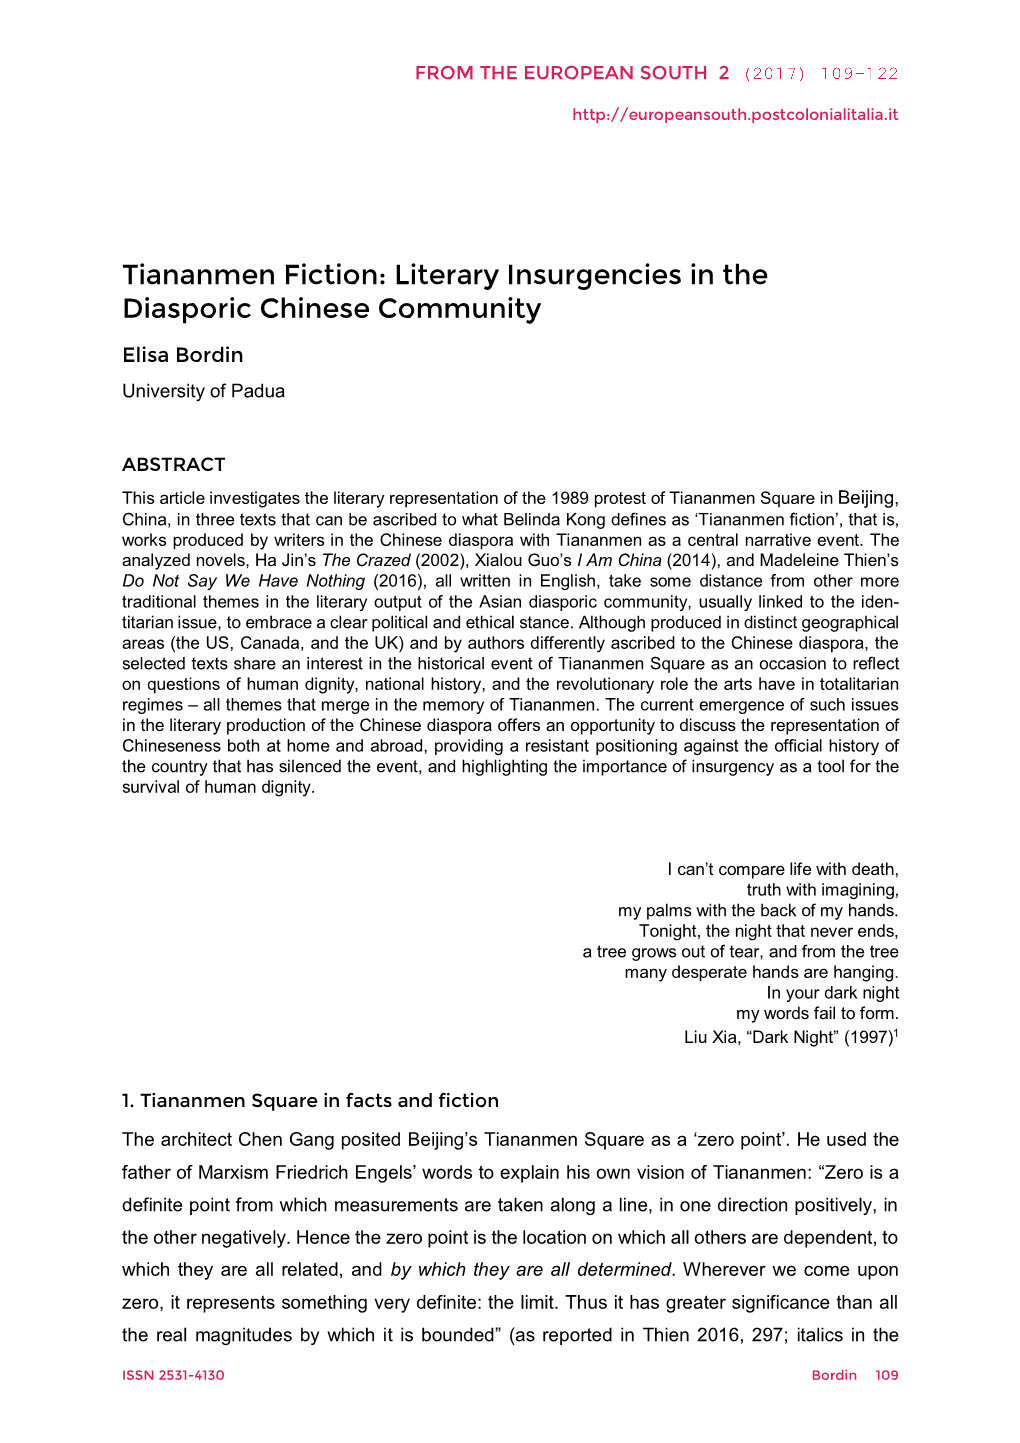 Tiananmen Fiction: Literary Insurgencies in the Diasporic Chinese Community